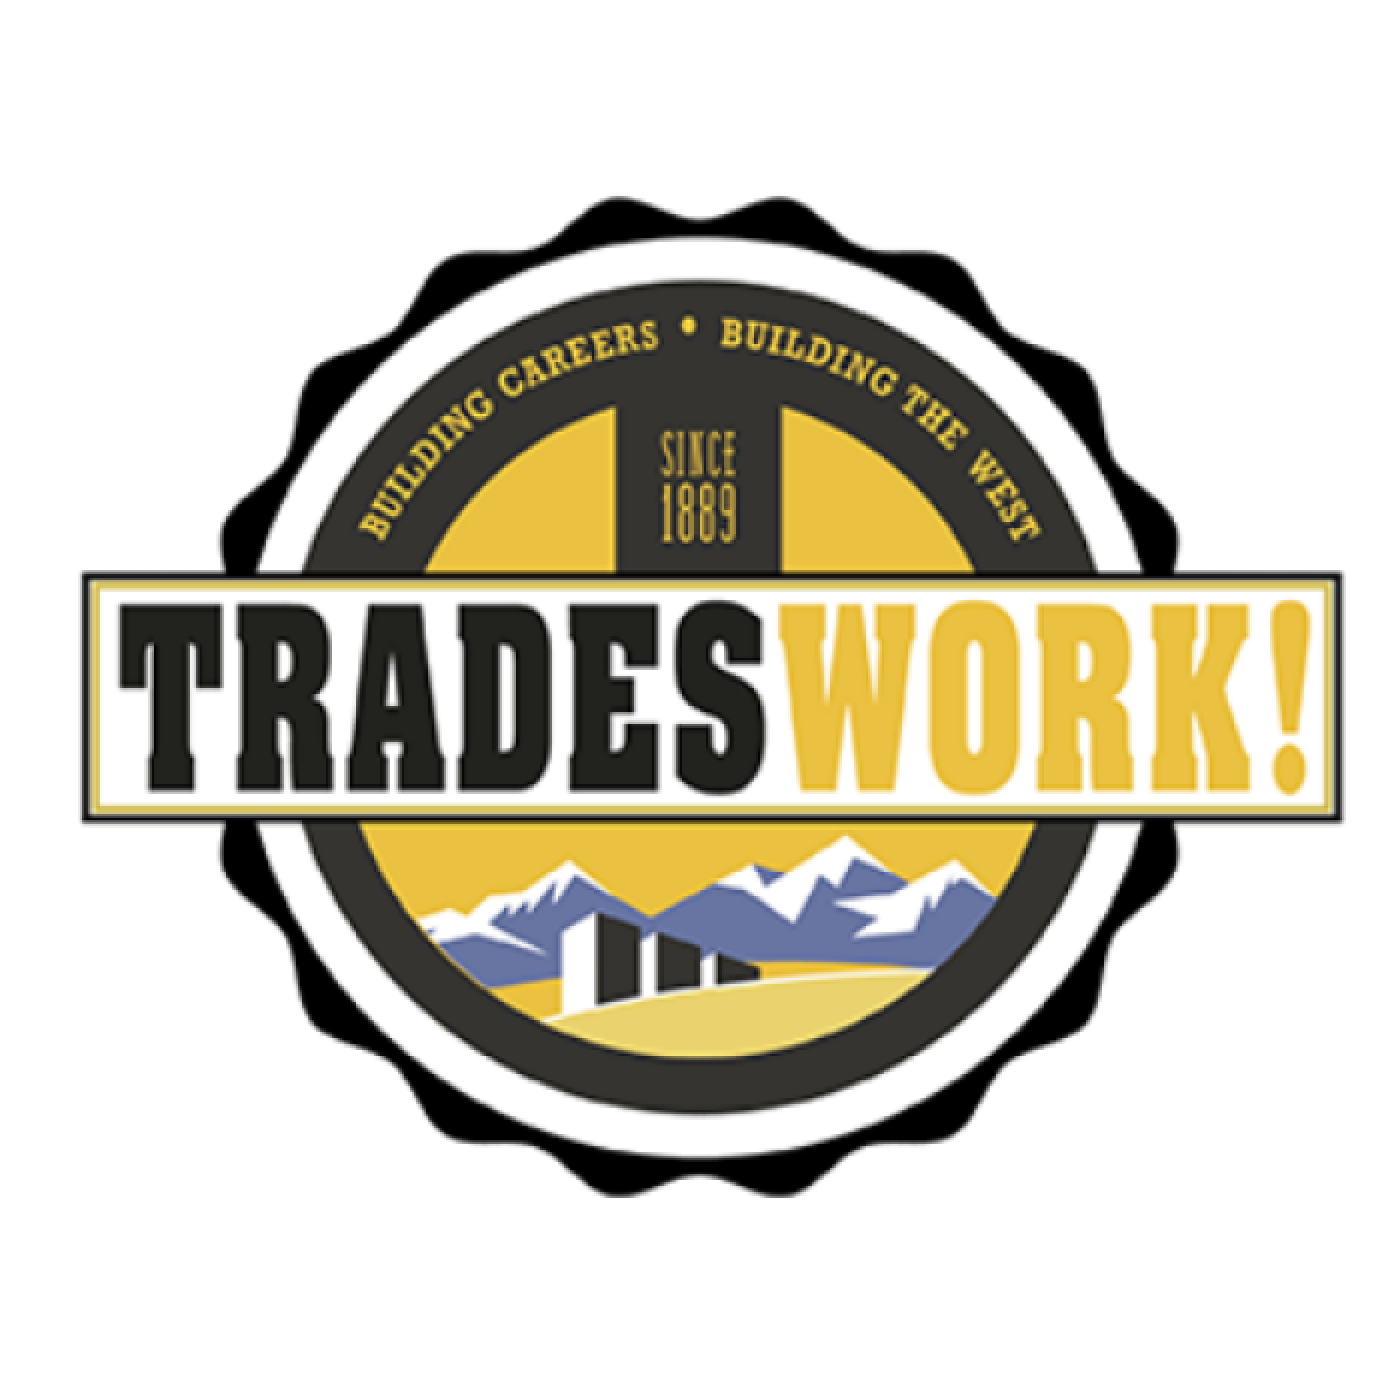 Tradeswork: The Rocky Mountain MCA Podcast